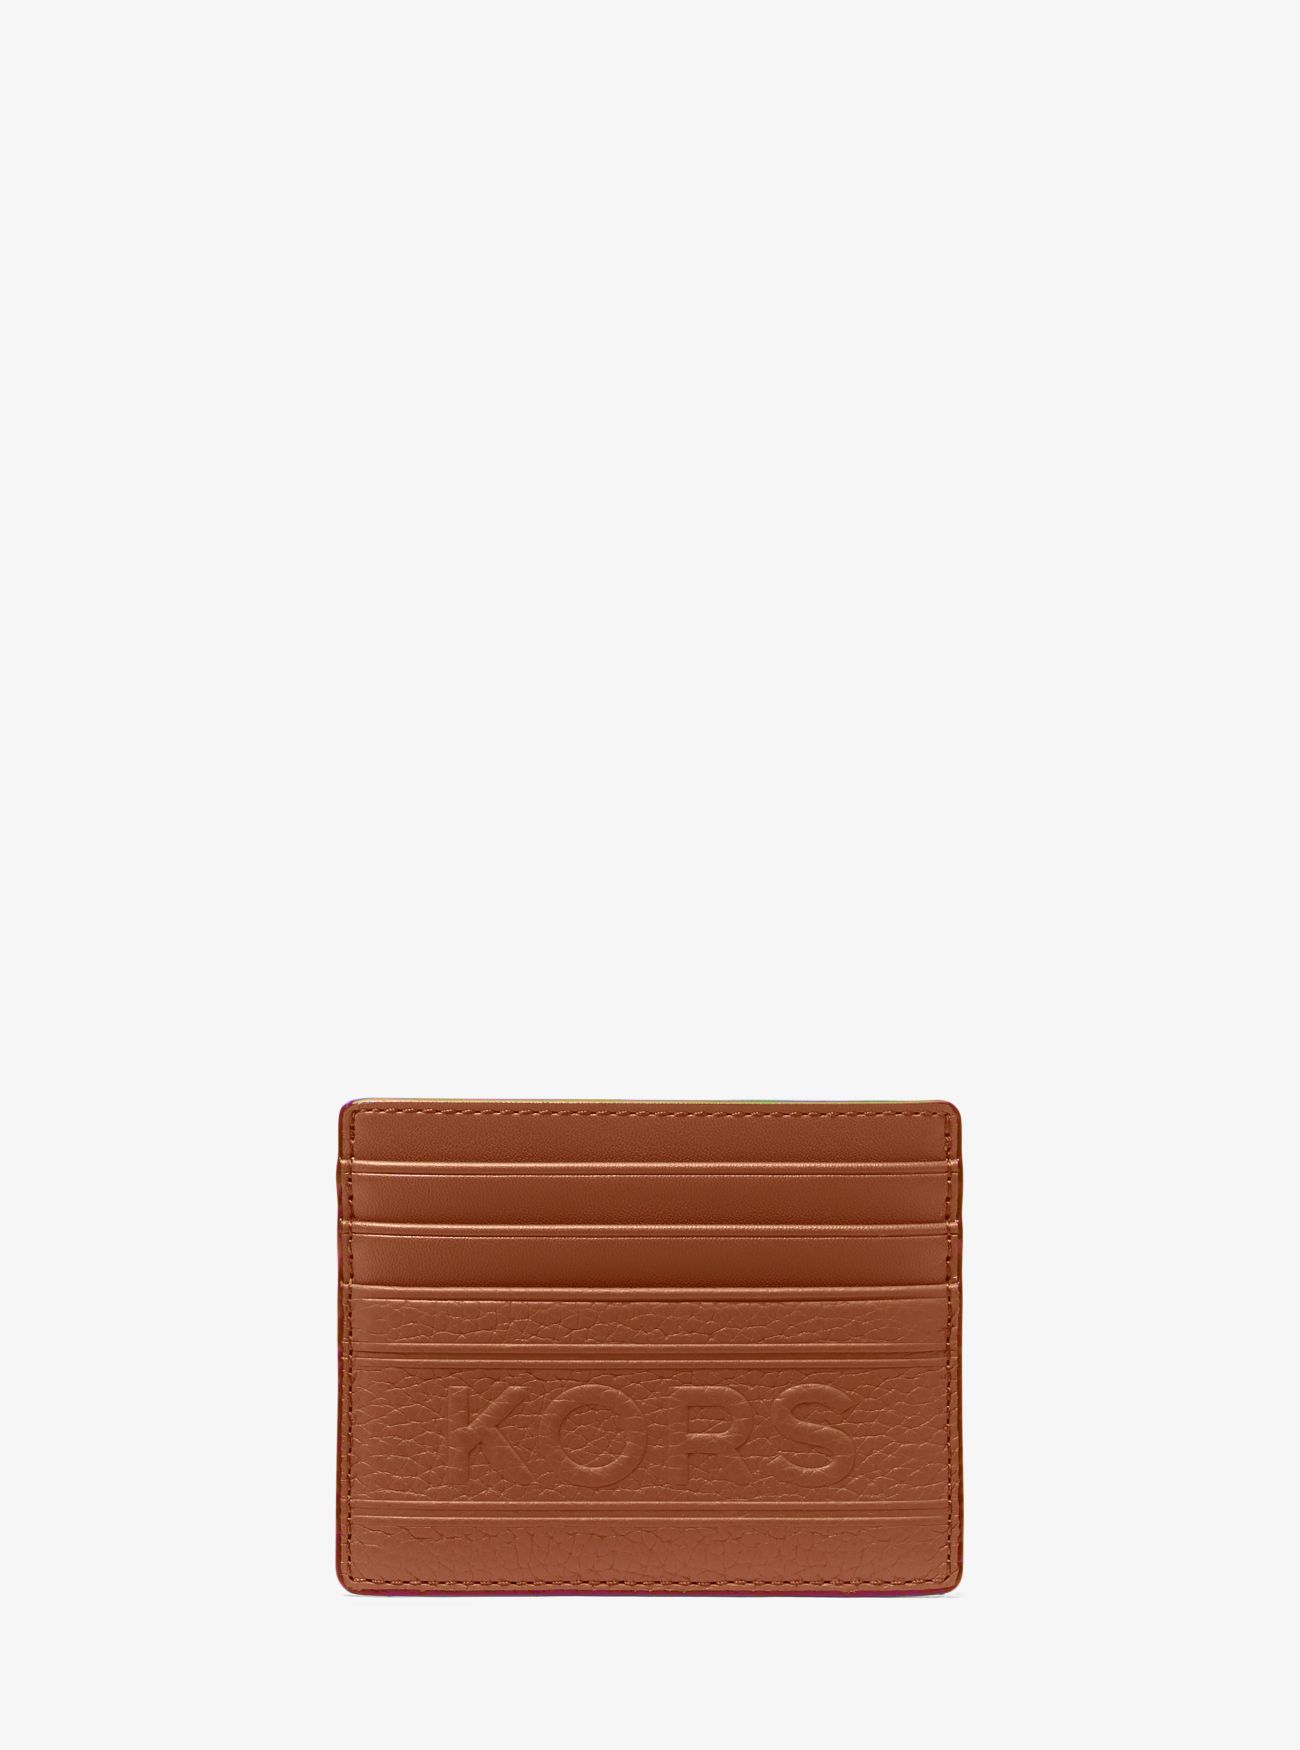 MK Hudson Embossed Pebbled Leather Tall Card Case - Brown - Michael Kors